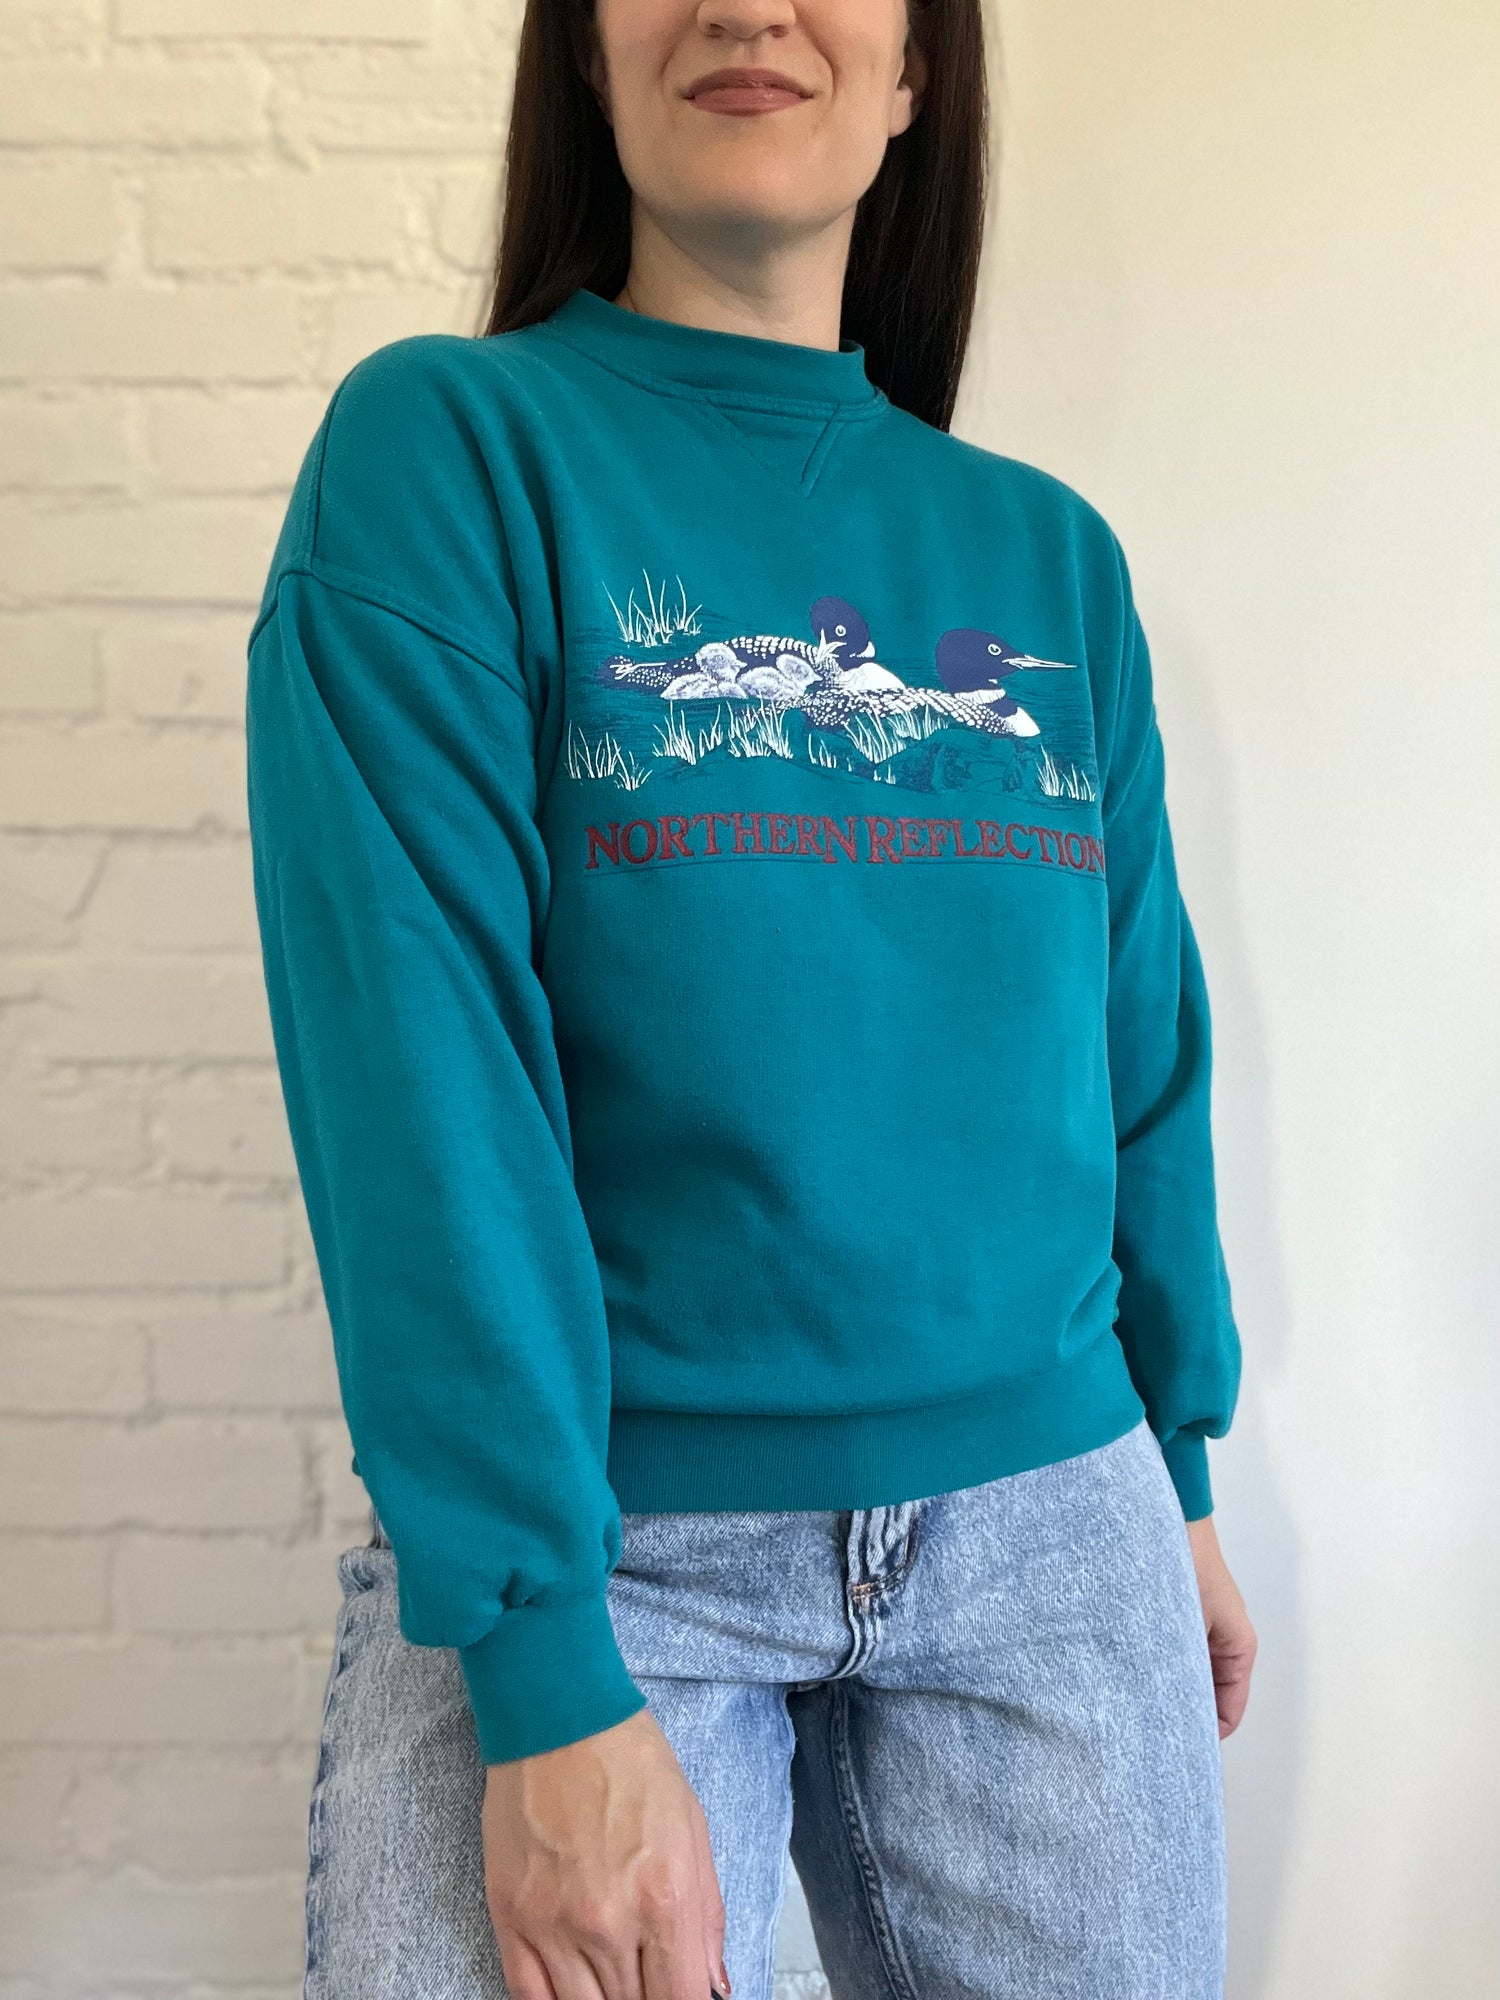 Vintage 1990s Northern Reflections Crewneck Sweatshirt 